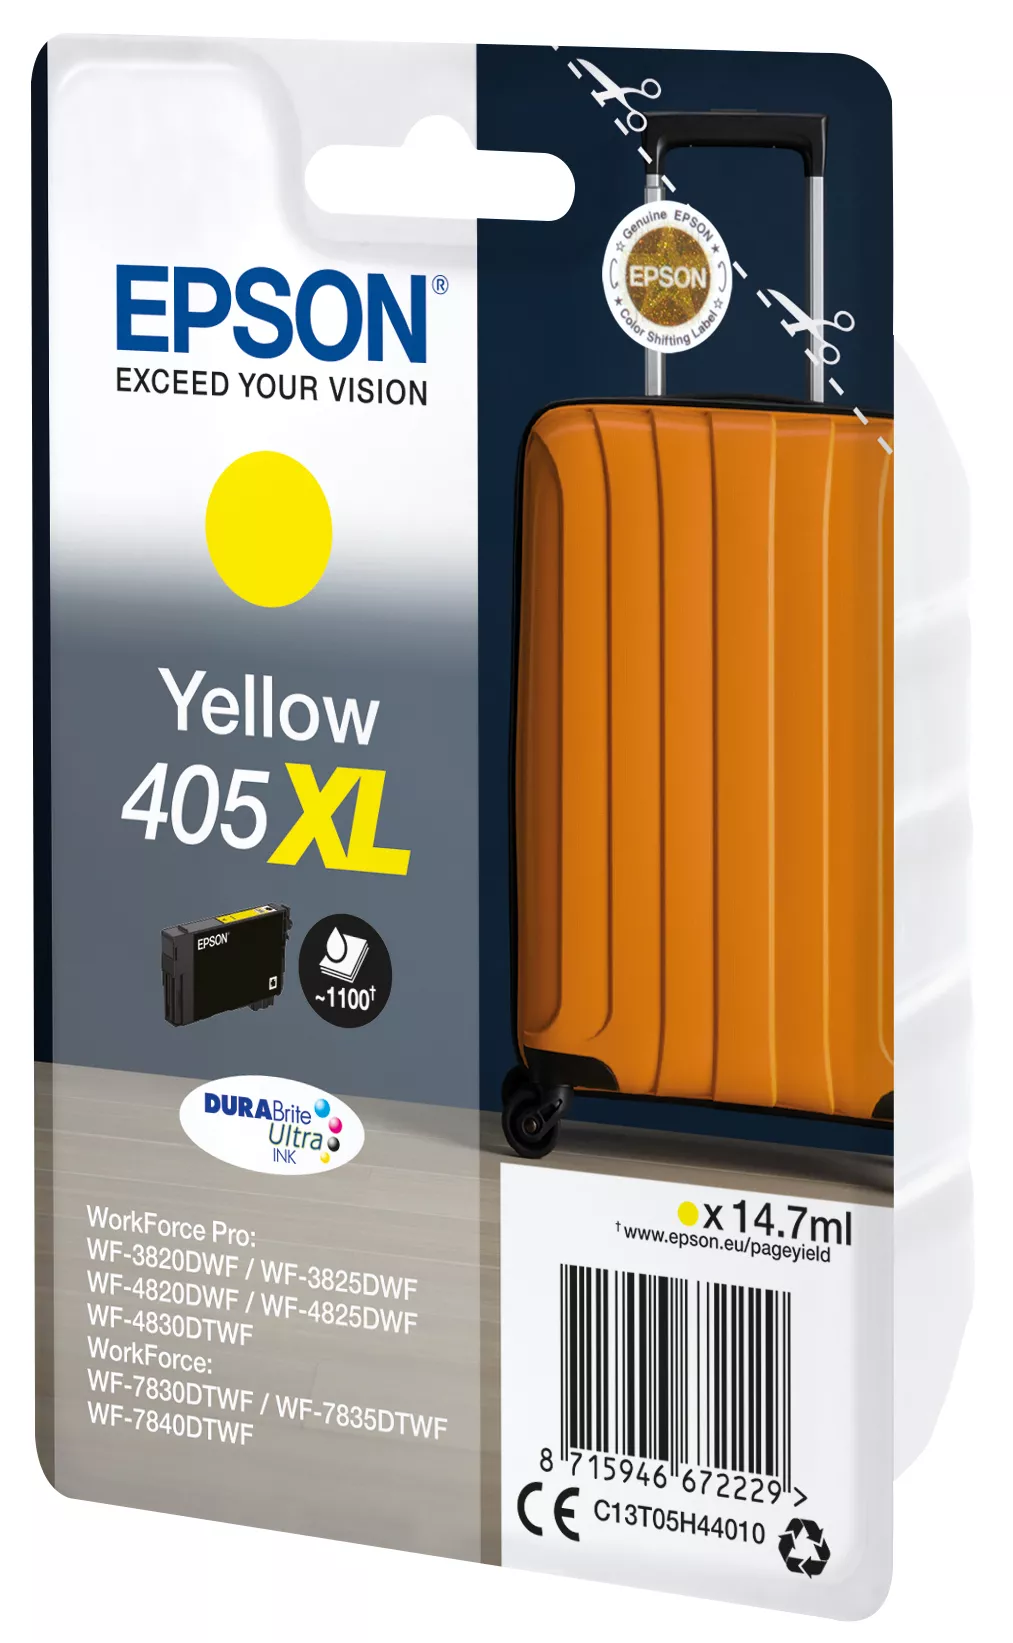 Vente EPSON Singlepack Yellow 405XL DURABrite Ultra Ink Epson au meilleur prix - visuel 2